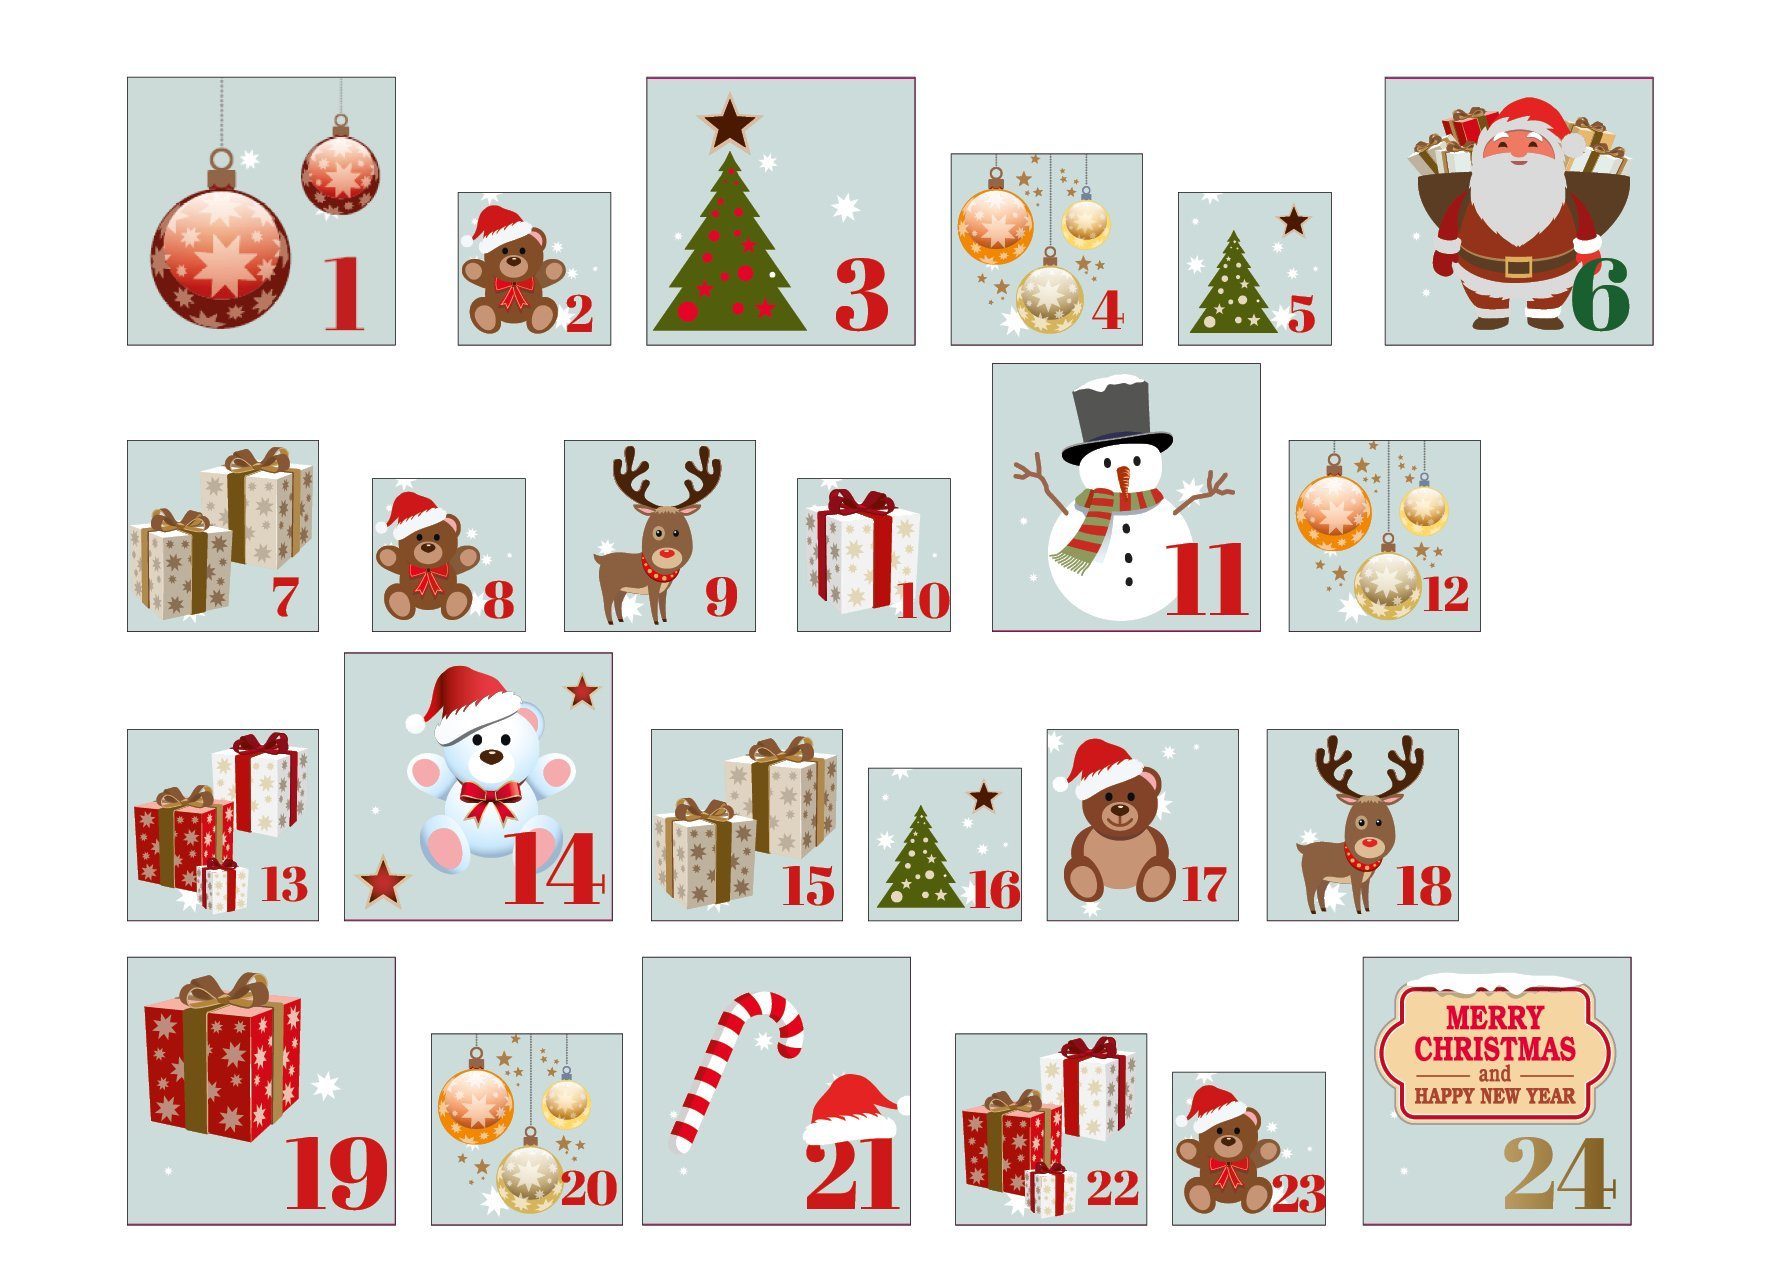 24 zum Adventskalender Befüllen Spetebo Adventskalender, befüllen Weihnachtsboxen befüllbarer zum -